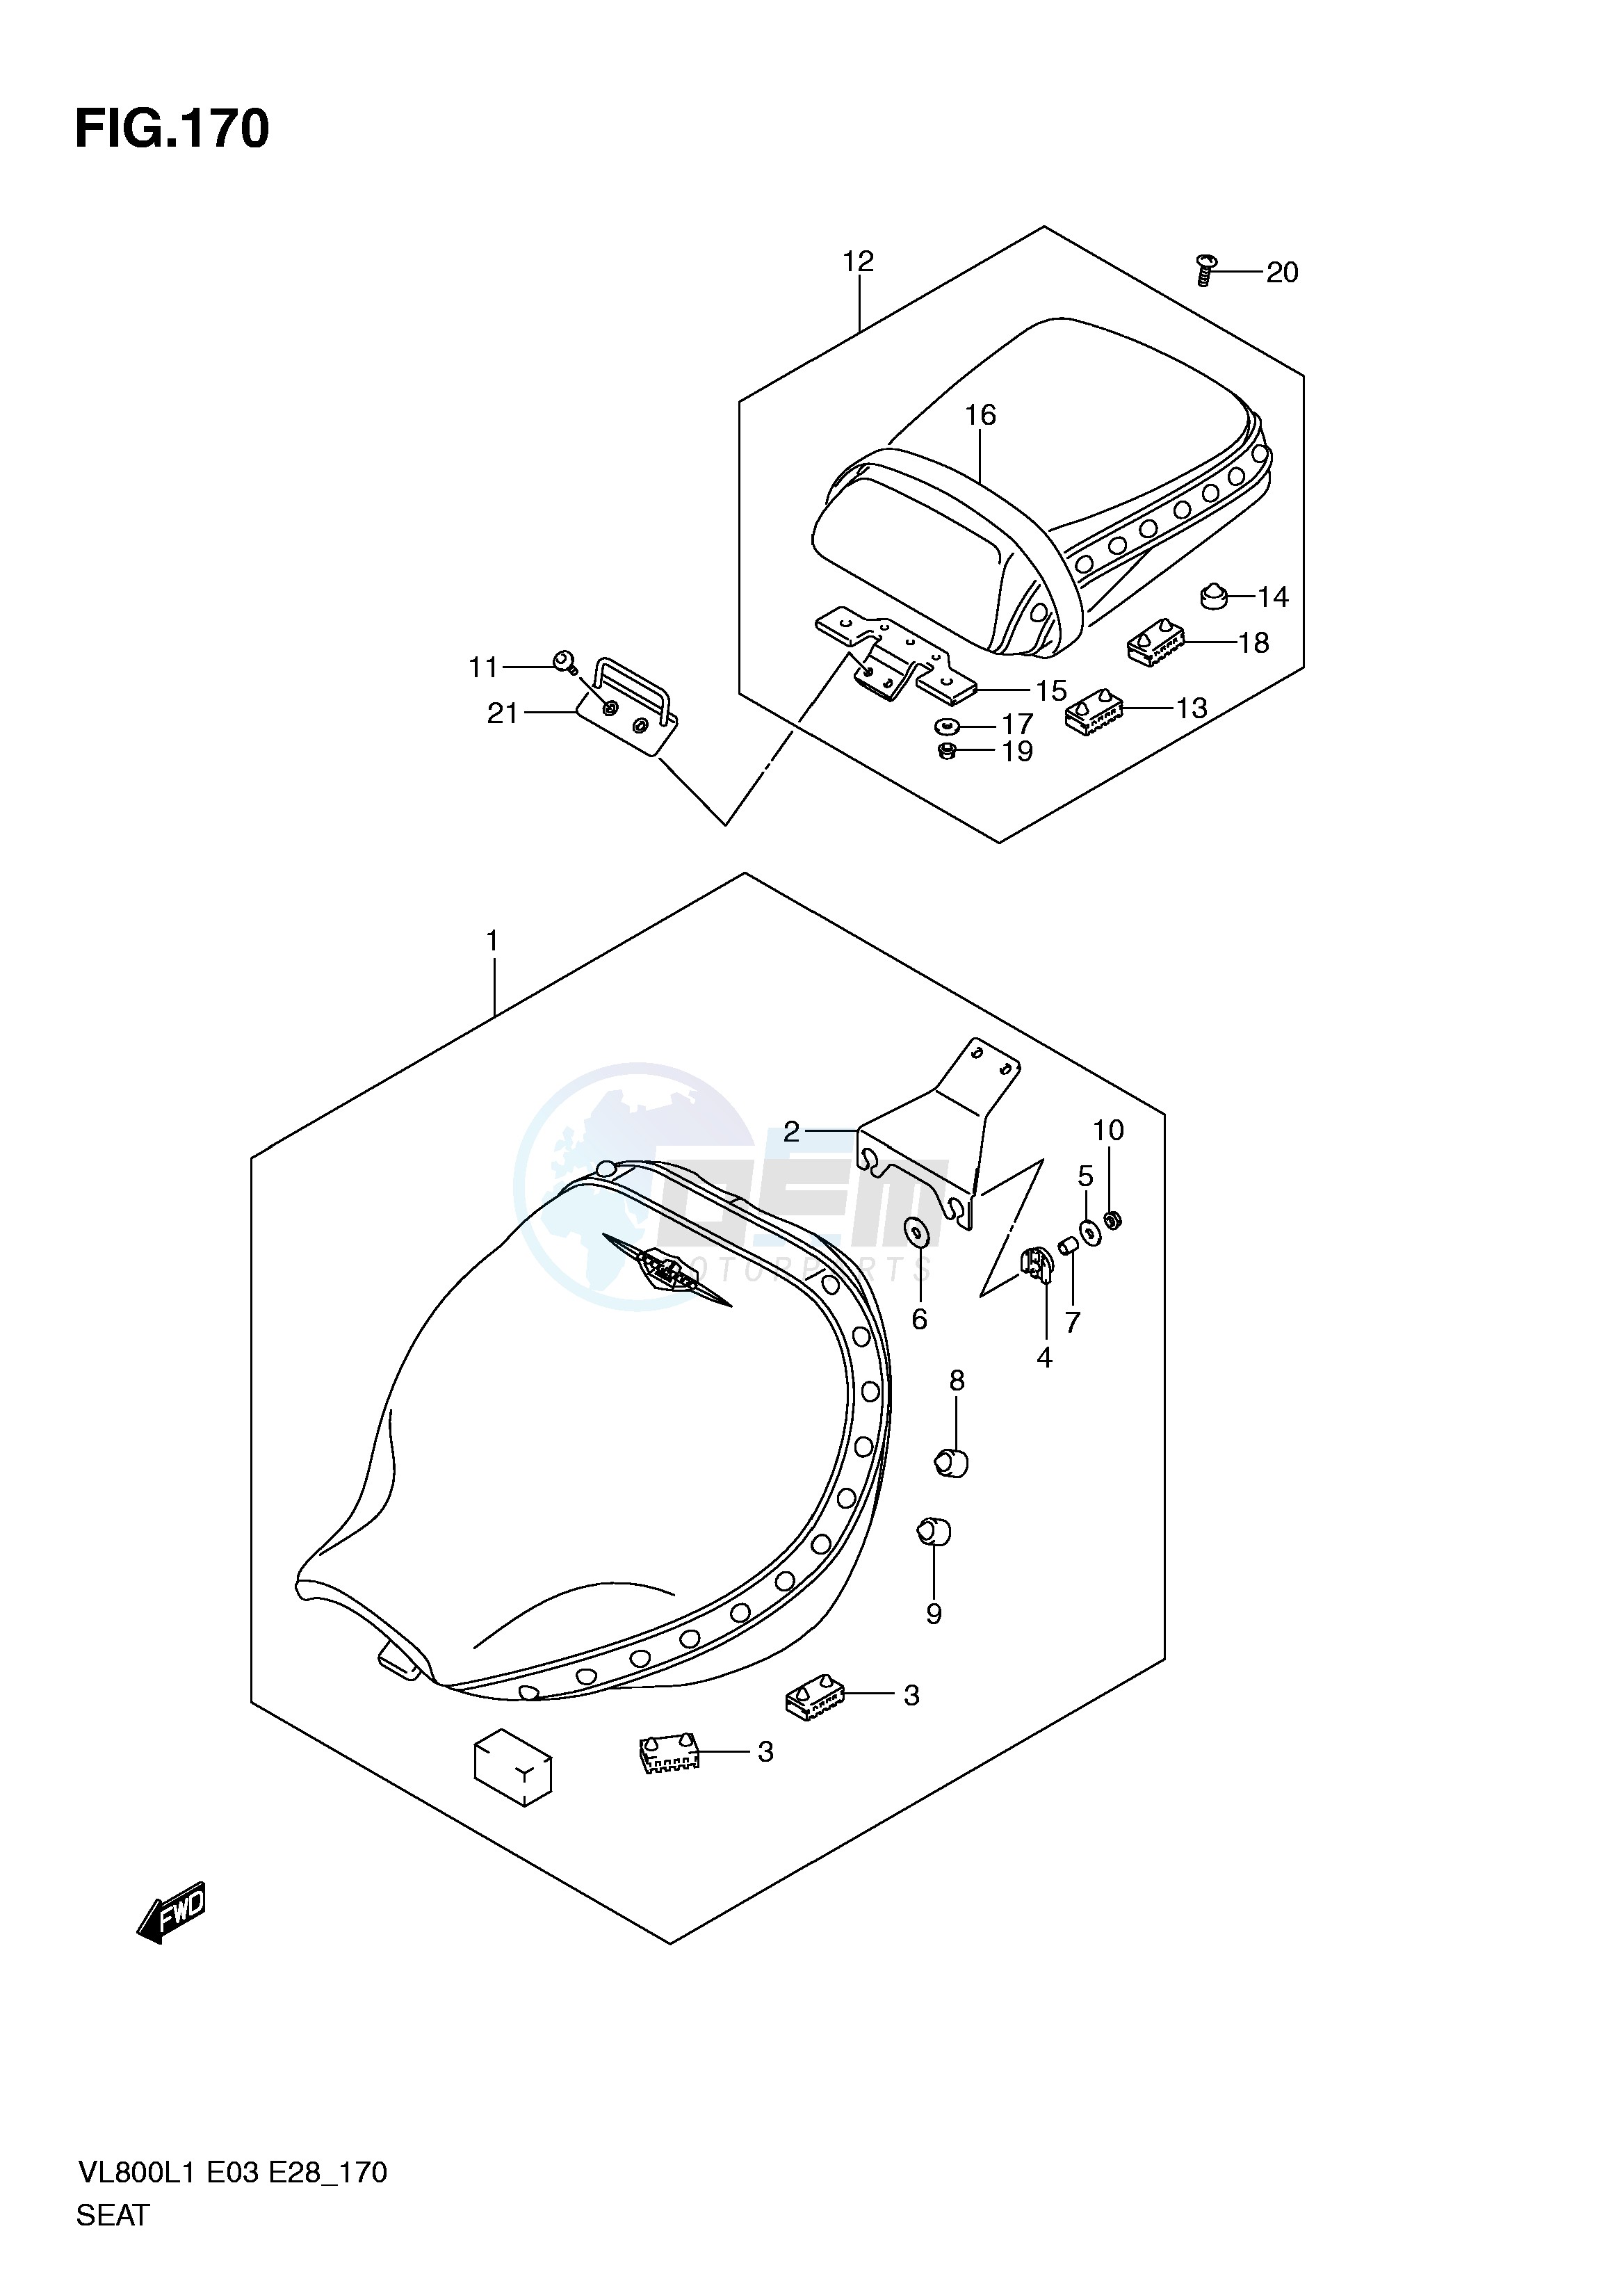 SEAT (VL800TL1 E3) blueprint